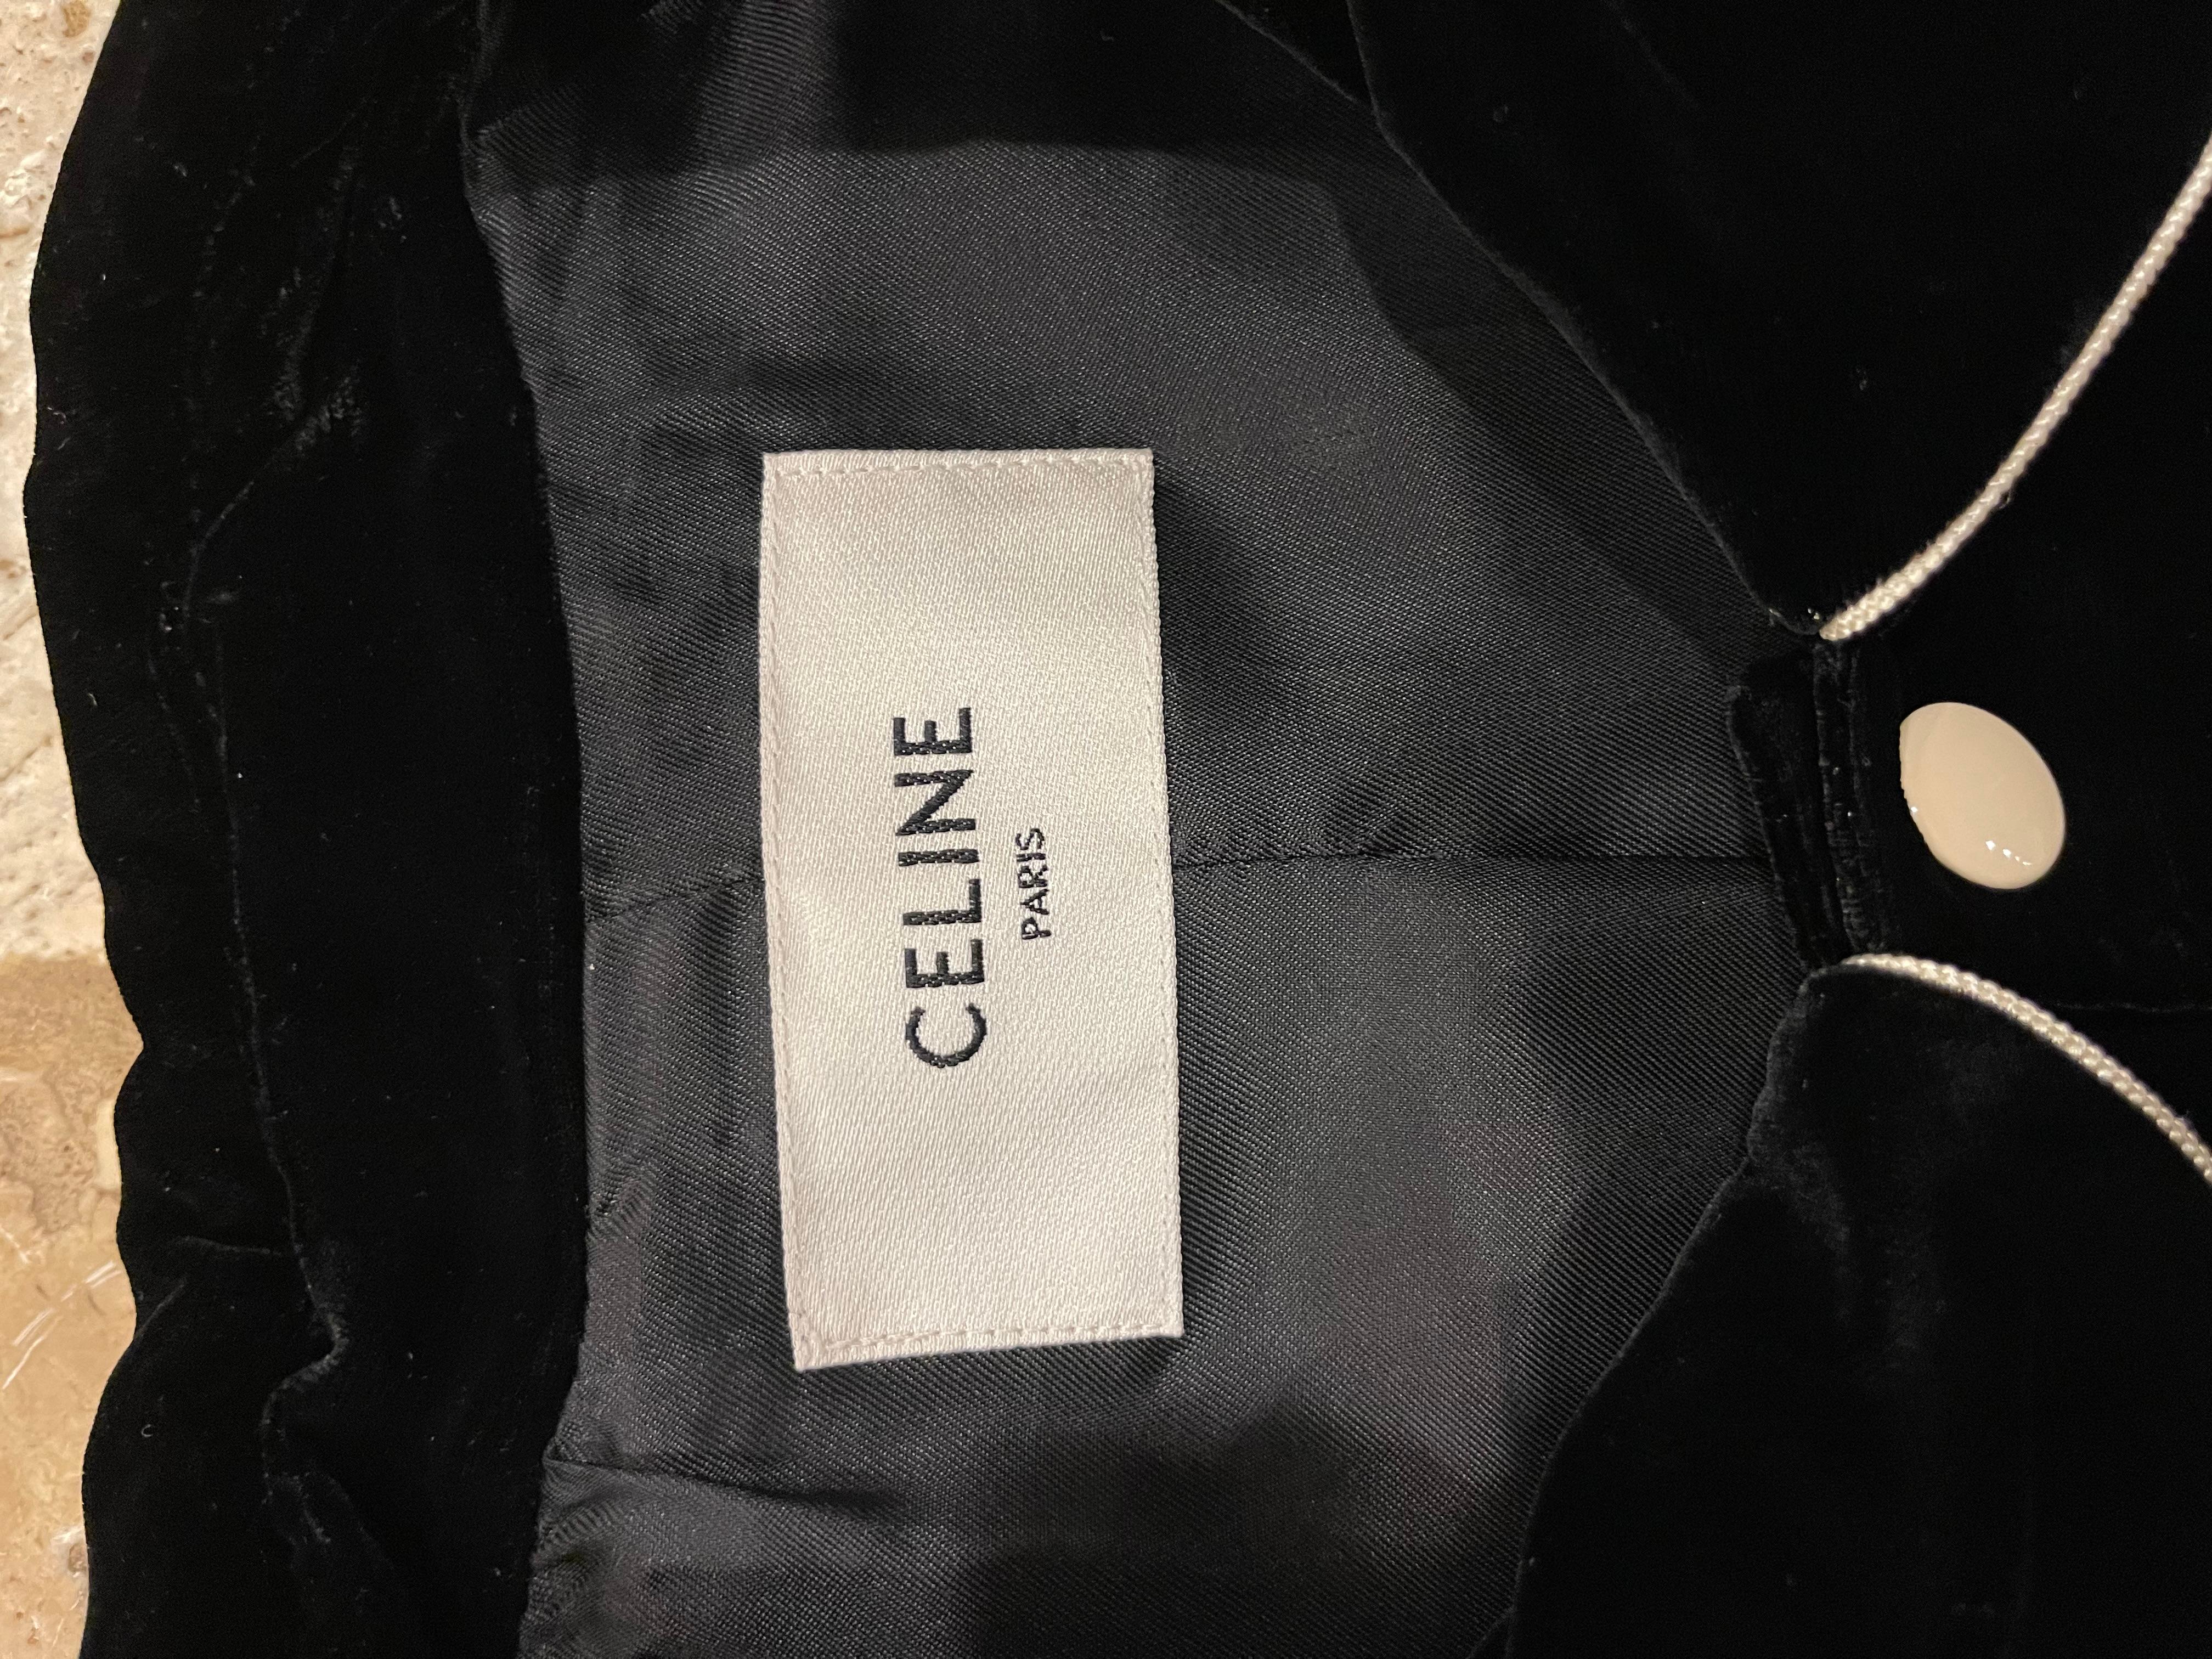 Celine Hedi Slimane Black Velvet Teddy Varsity Jacket RARE size 48 2